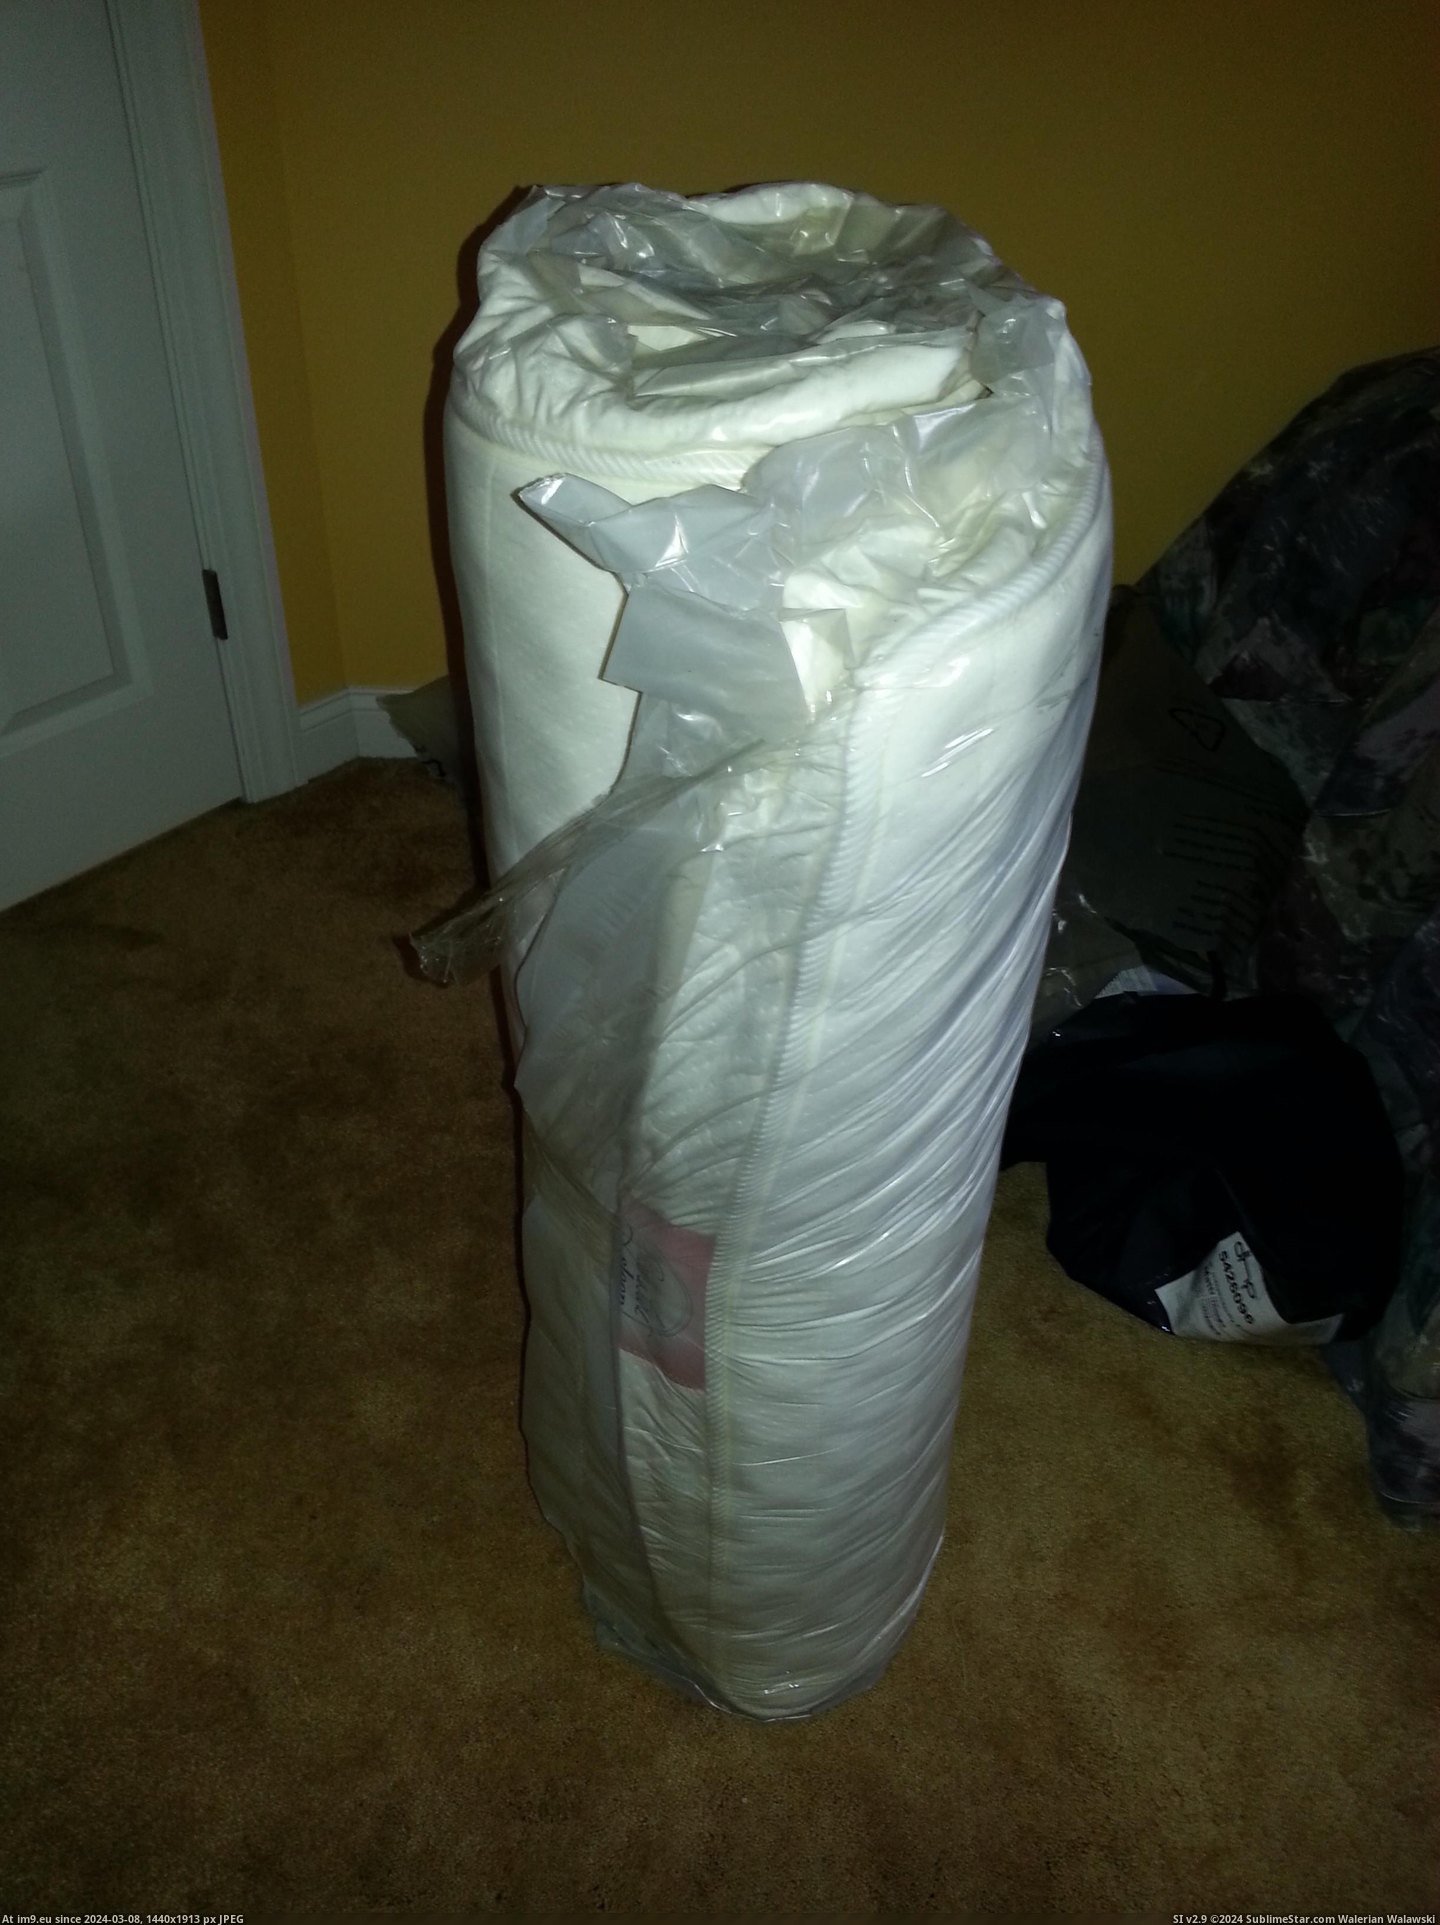 #Broke #Bag #Vacuum #Duffle #Unrolled #Seal #Mattress [Mildlyinteresting] Got a mattress in a duffle bag today, unrolled it and broke the vacuum seal 6 Pic. (Obraz z album My r/MILDLYINTERESTING favs))